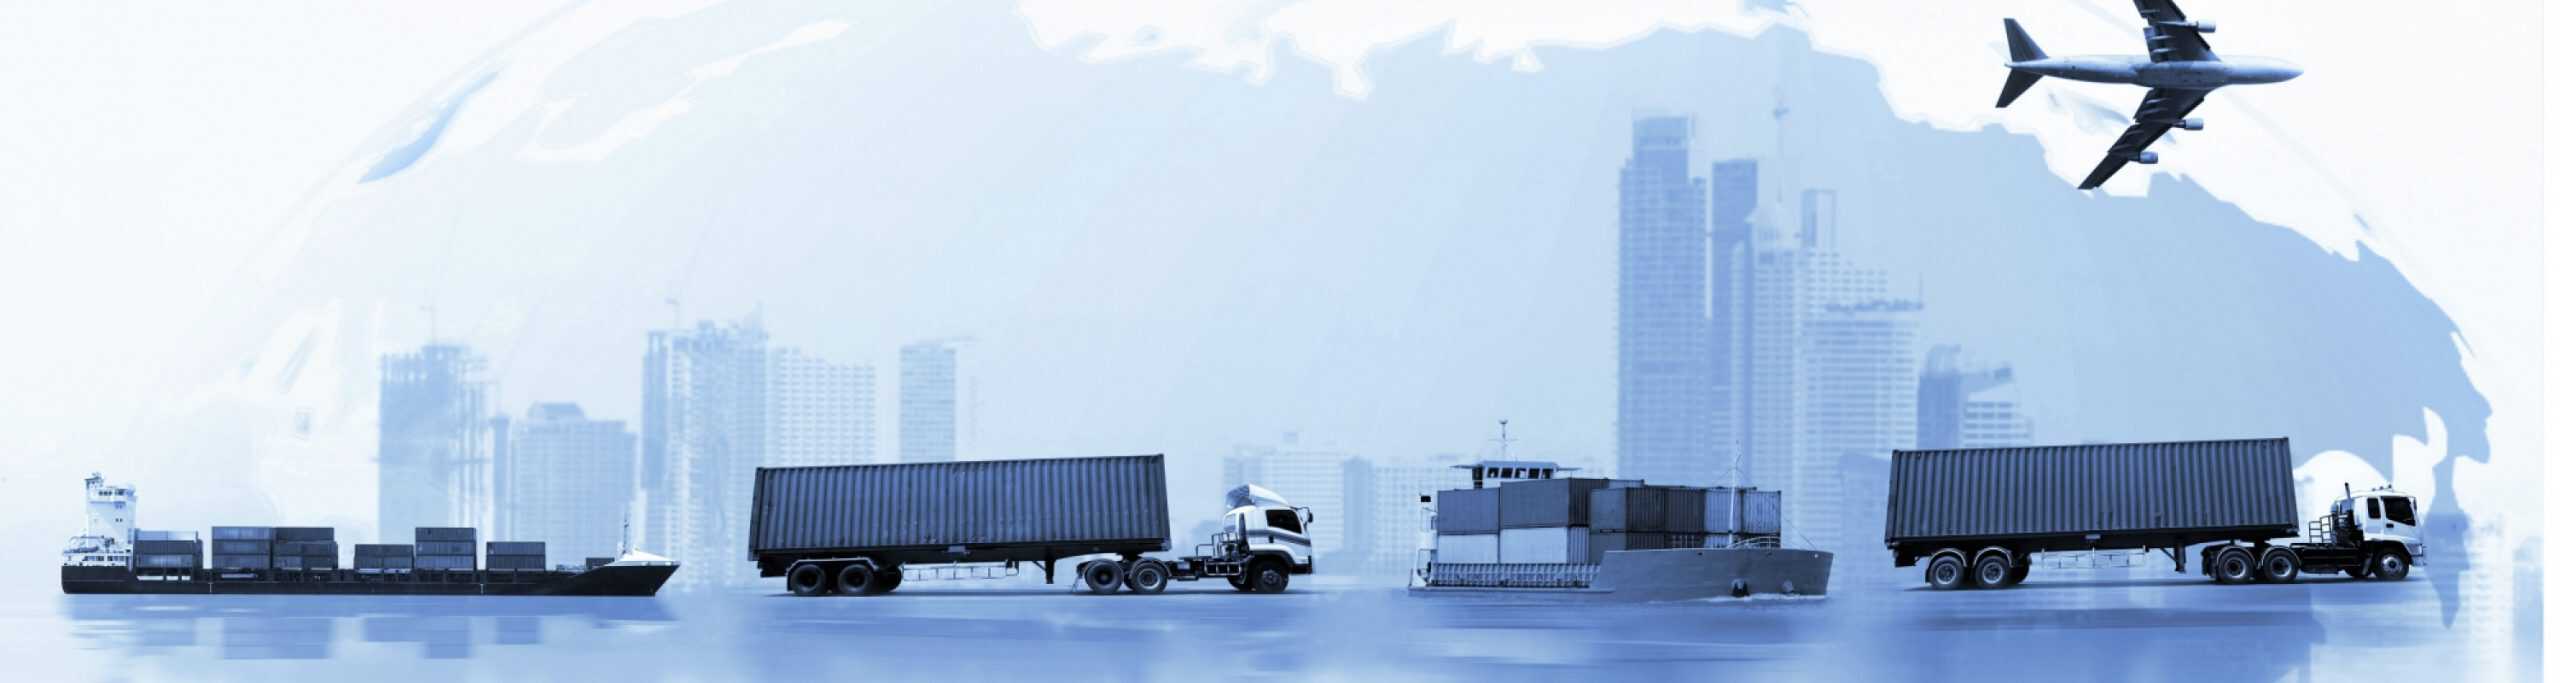 trade regulations logistics customs duty Kneppelhout lawyers law firm Rotterdam